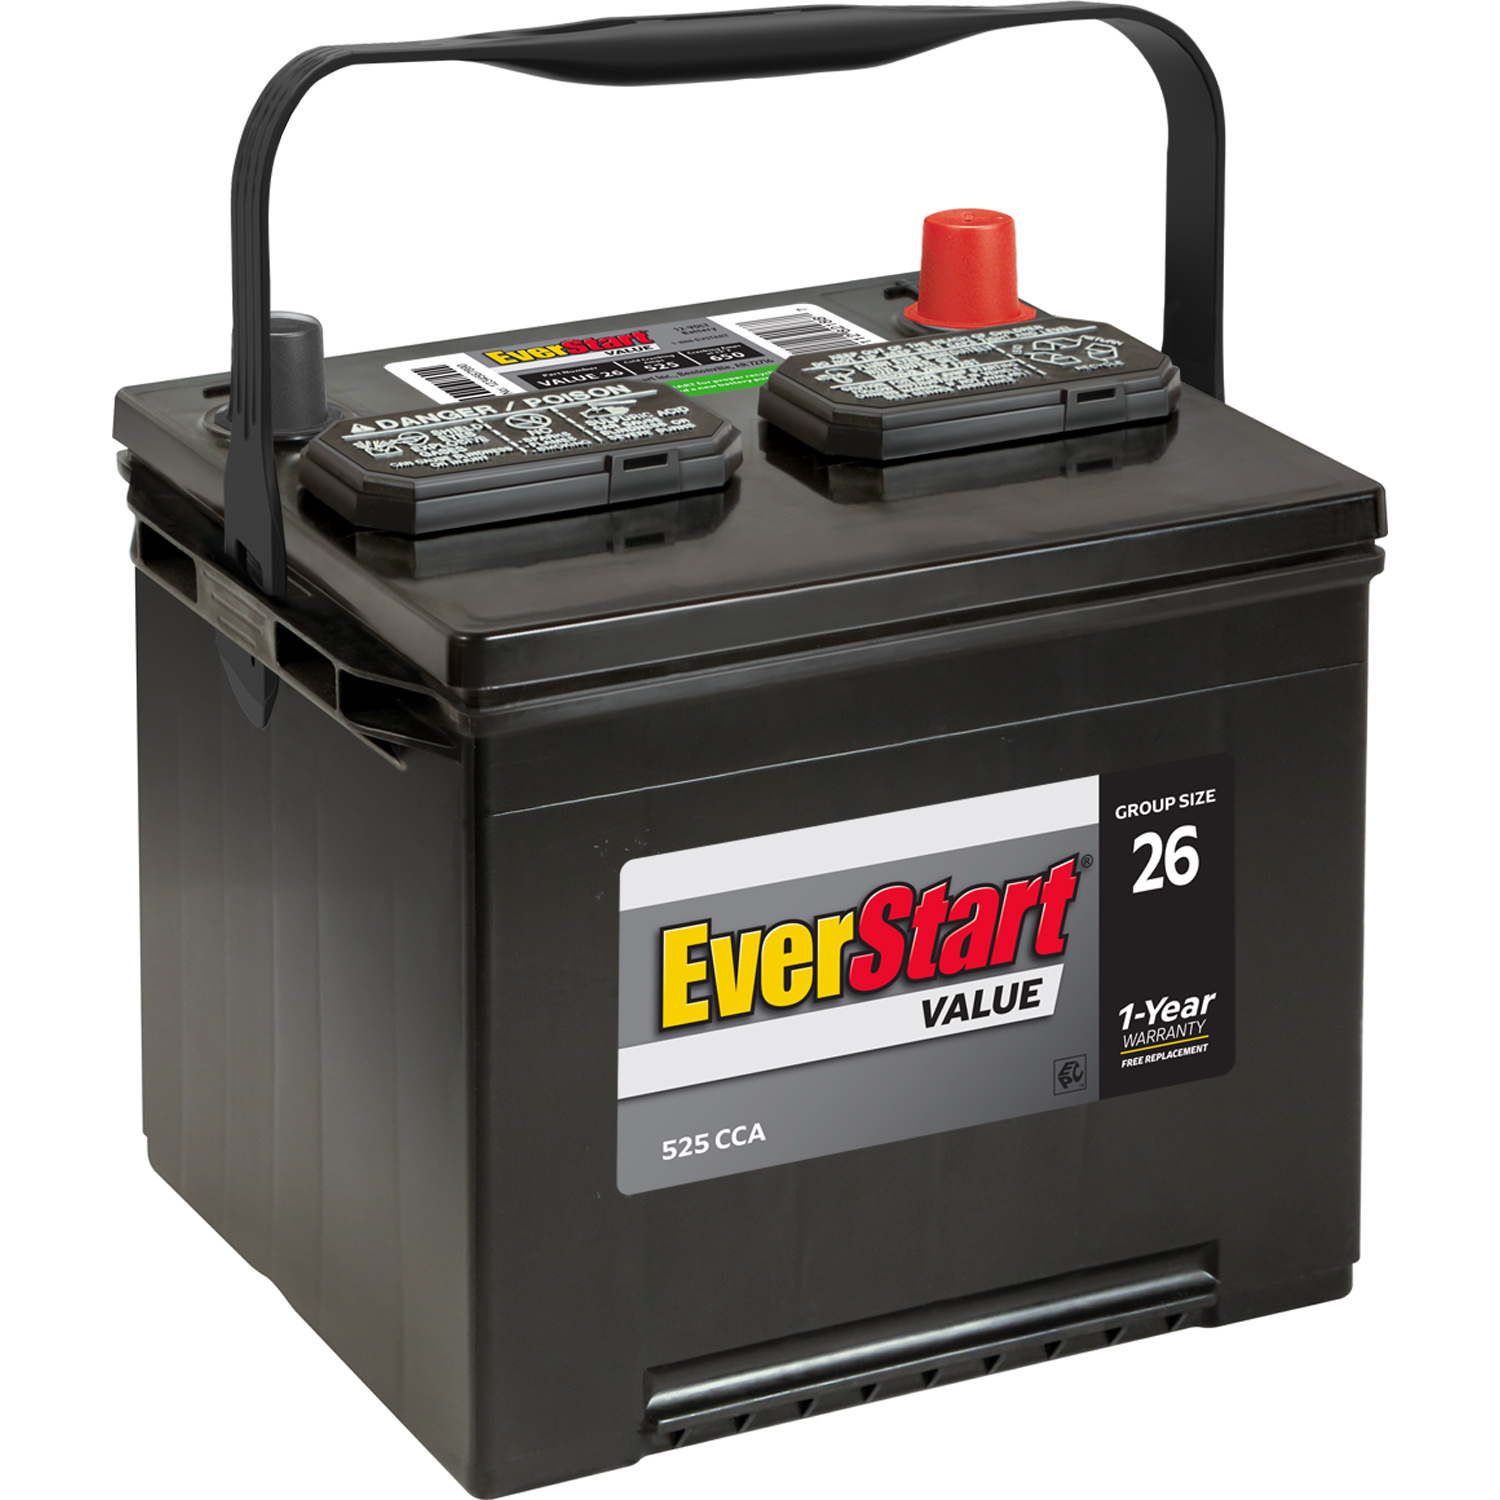 EverStart Value Lead Acid Automotive Battery, Group Size 26 12 Volt, 525 CCA - image 1 of 7